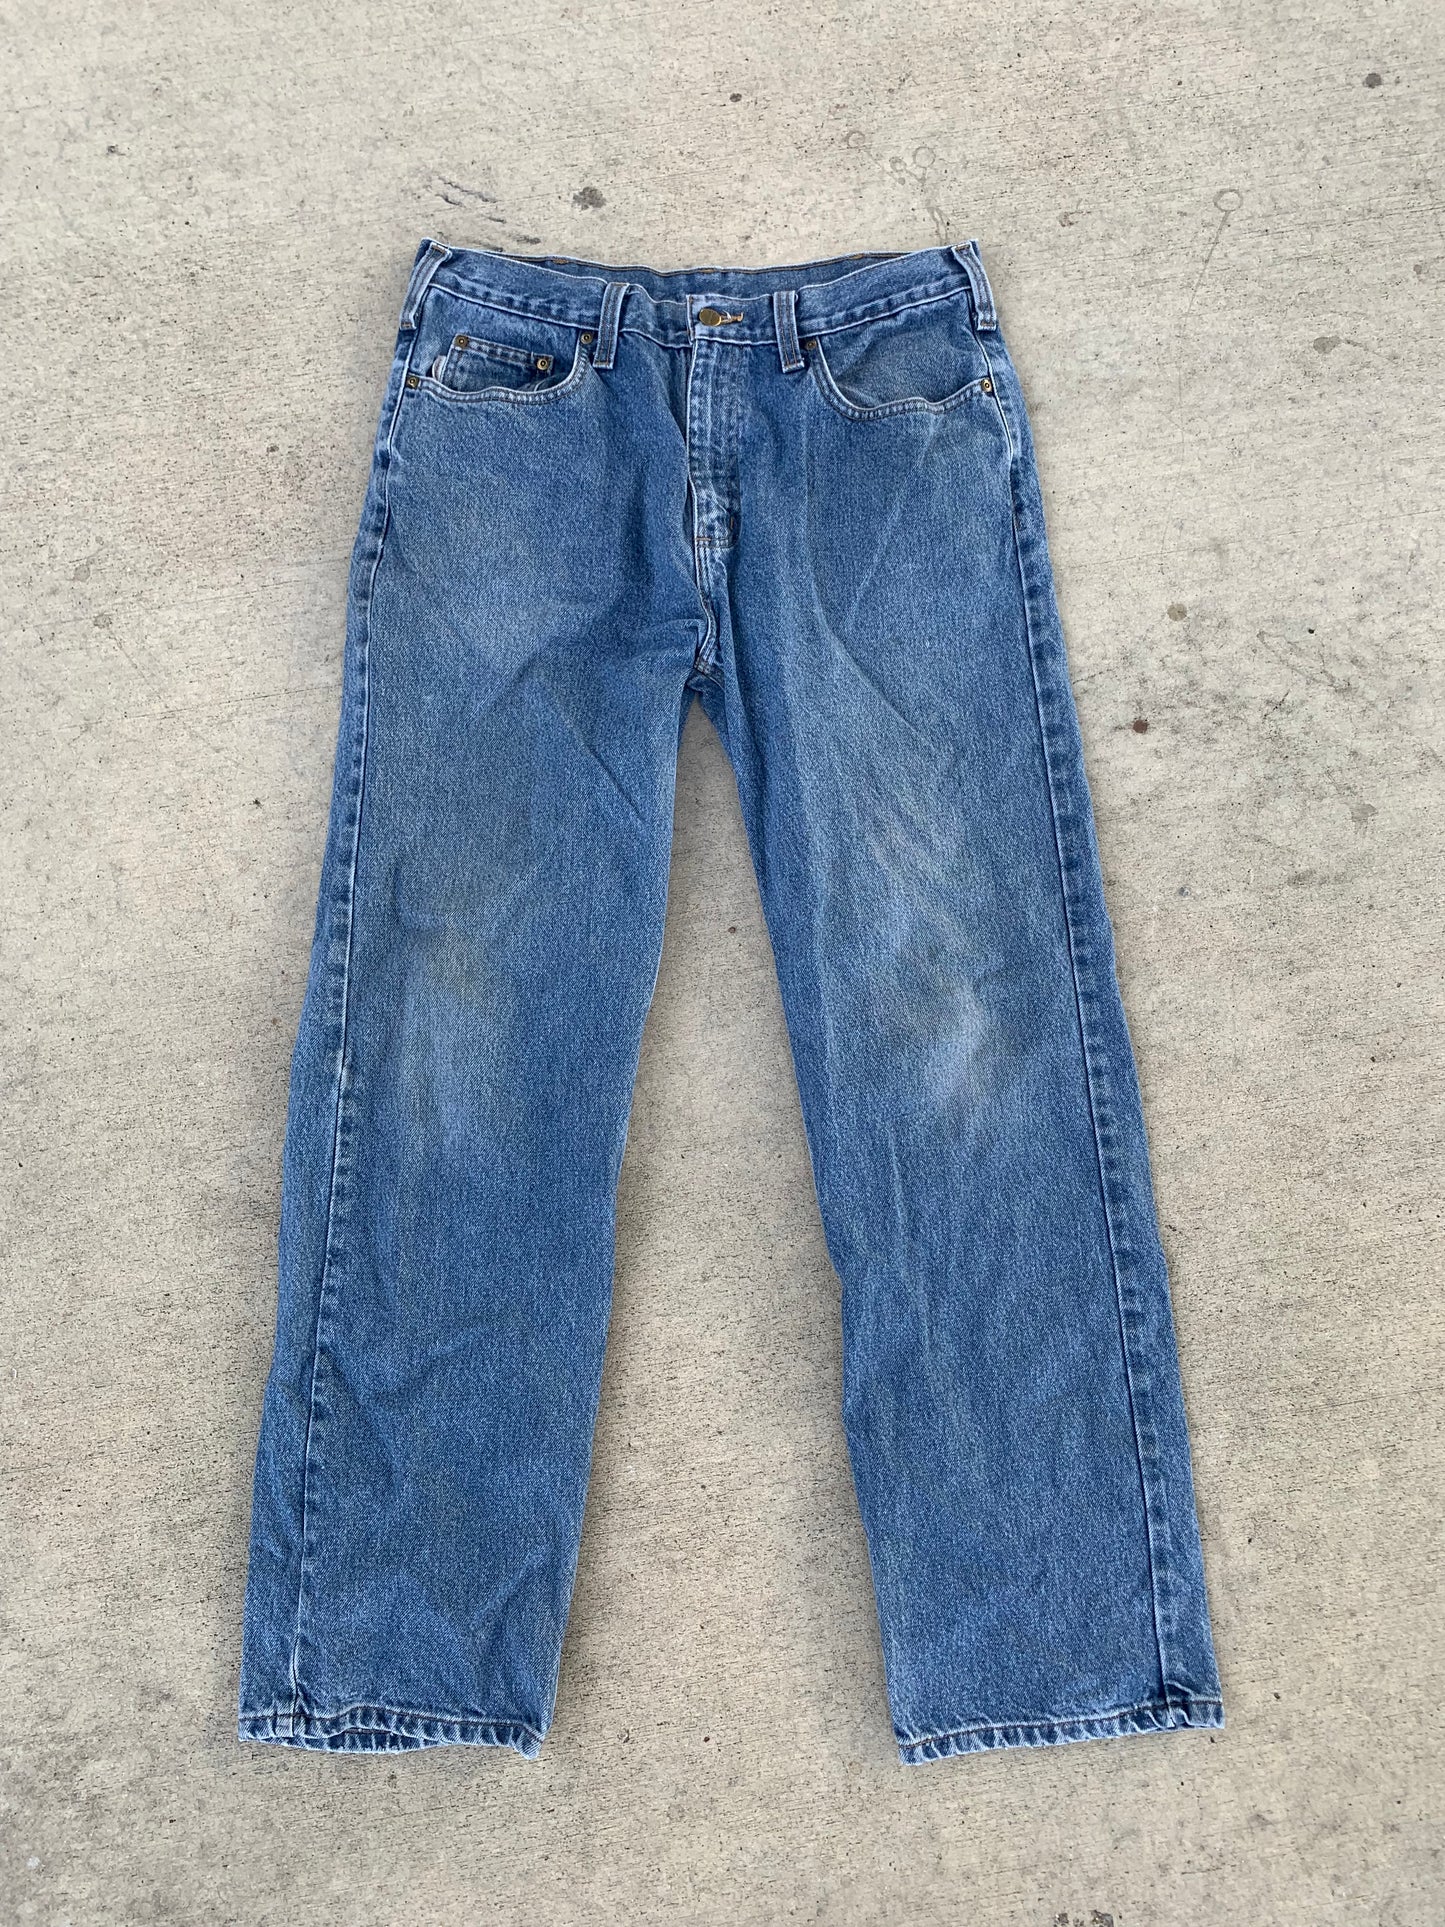 Medium Wash Carhartt Jeans